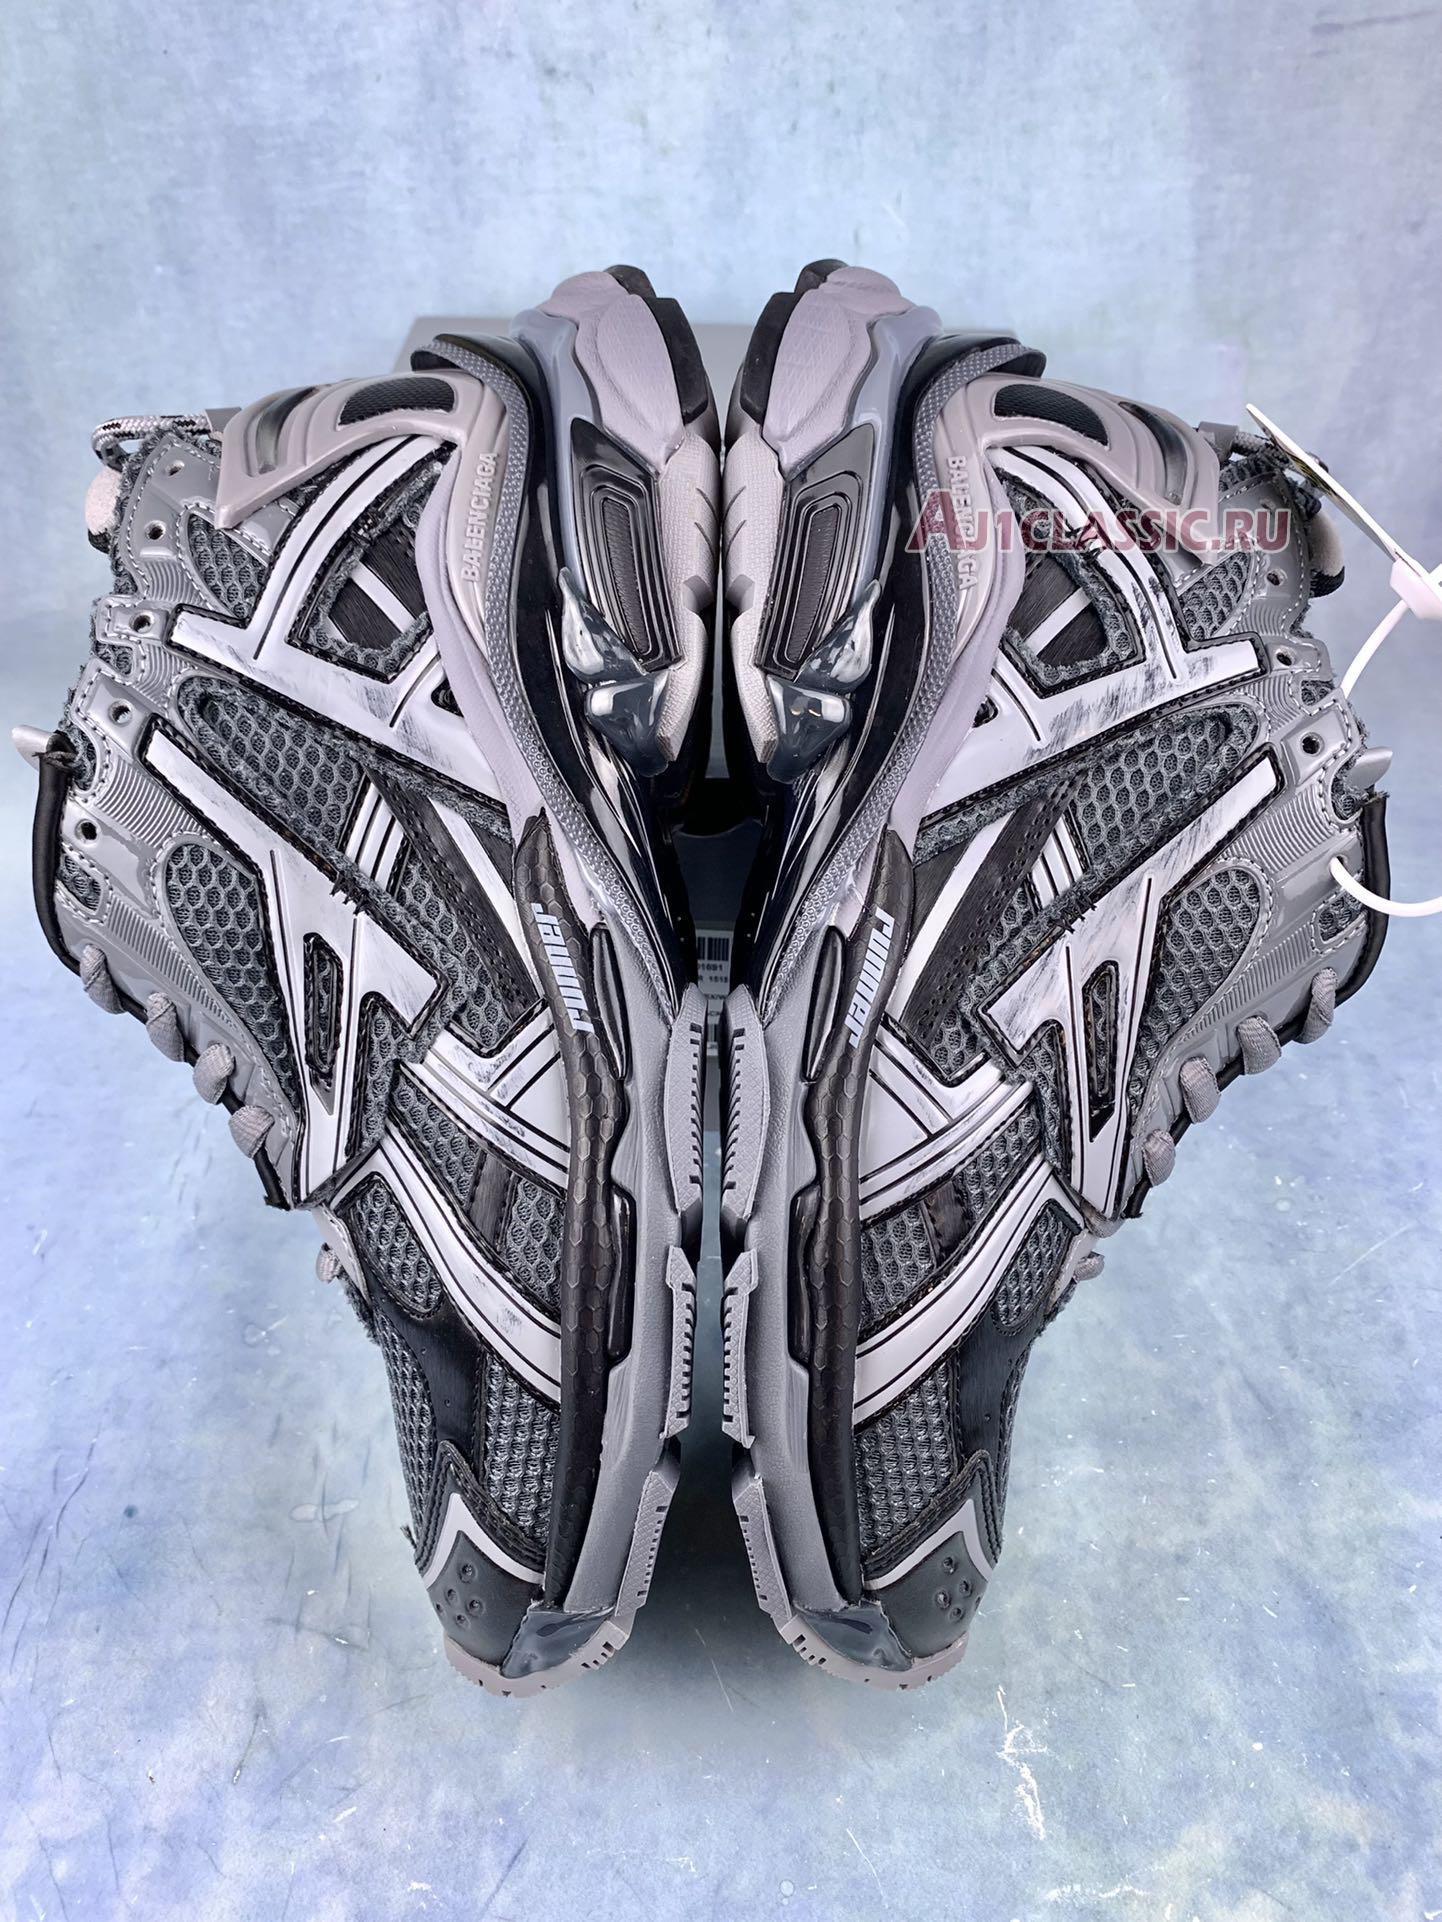 Balenciaga Runner Sneaker "Dark Grey Black" 677403 W3RBR 1515